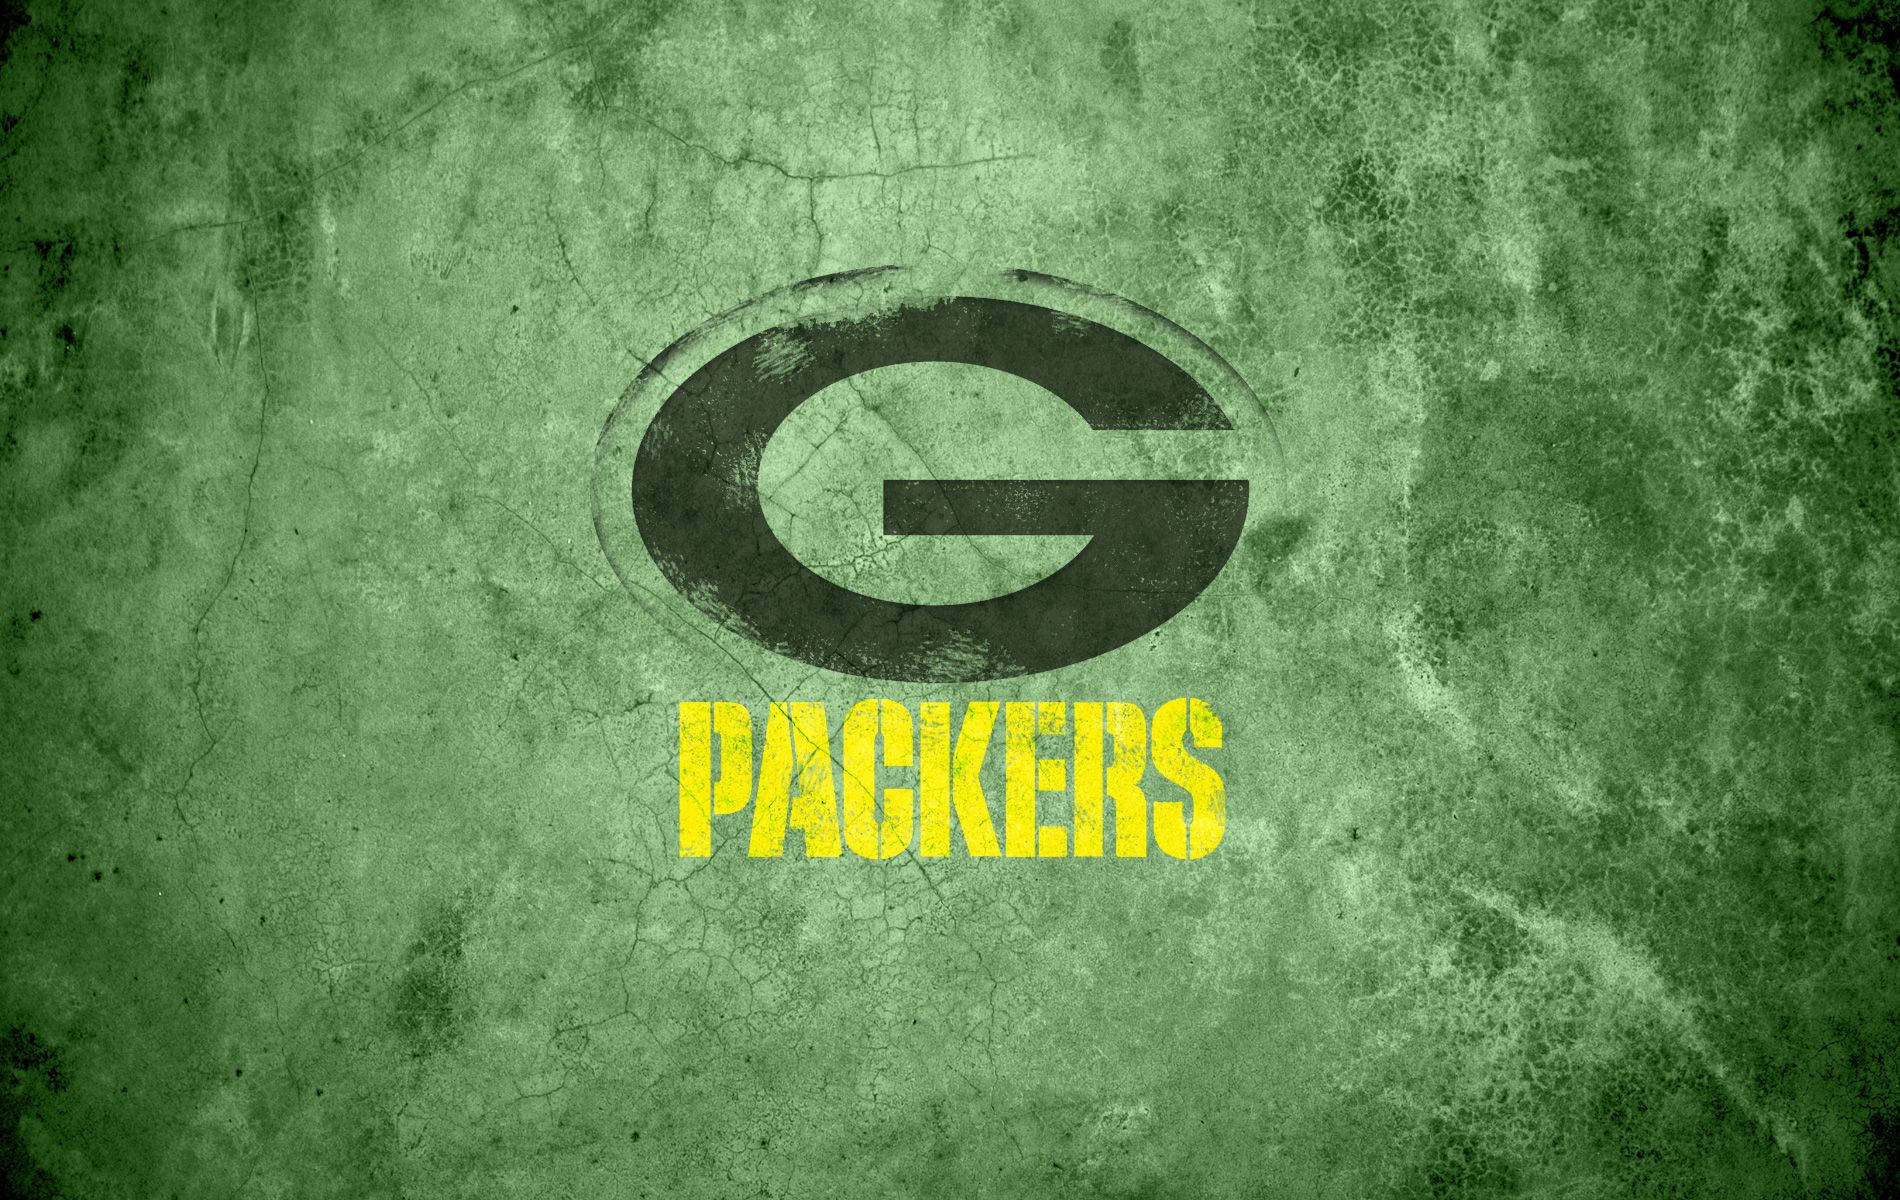 Champions Green Bay Packers Logo Wallpaper